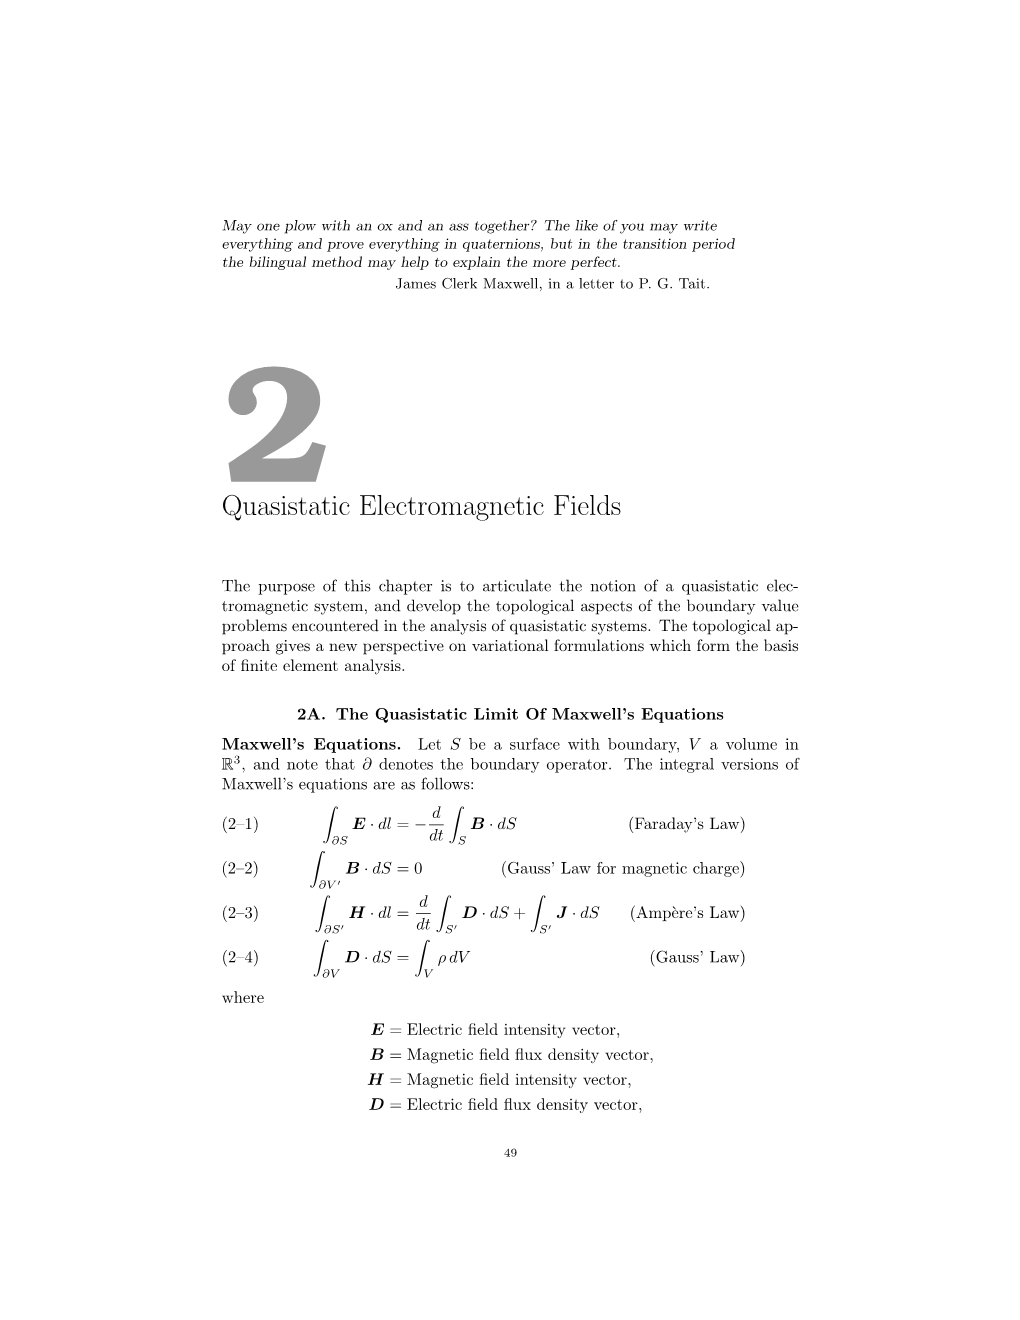 2Quasistatic Electromagnetic Fields